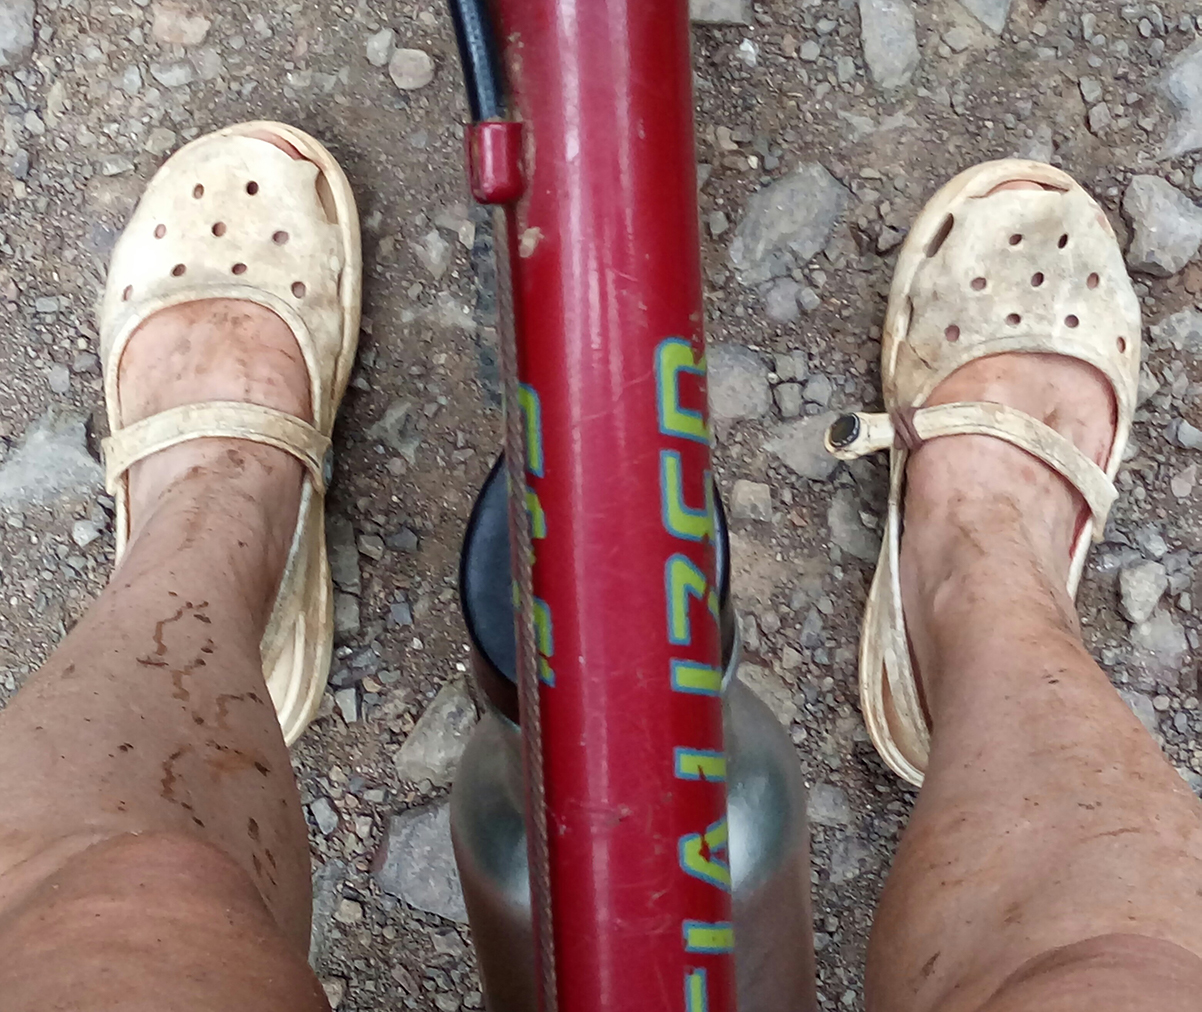 Sporting dirty crocs on a tour through Costa Rica.